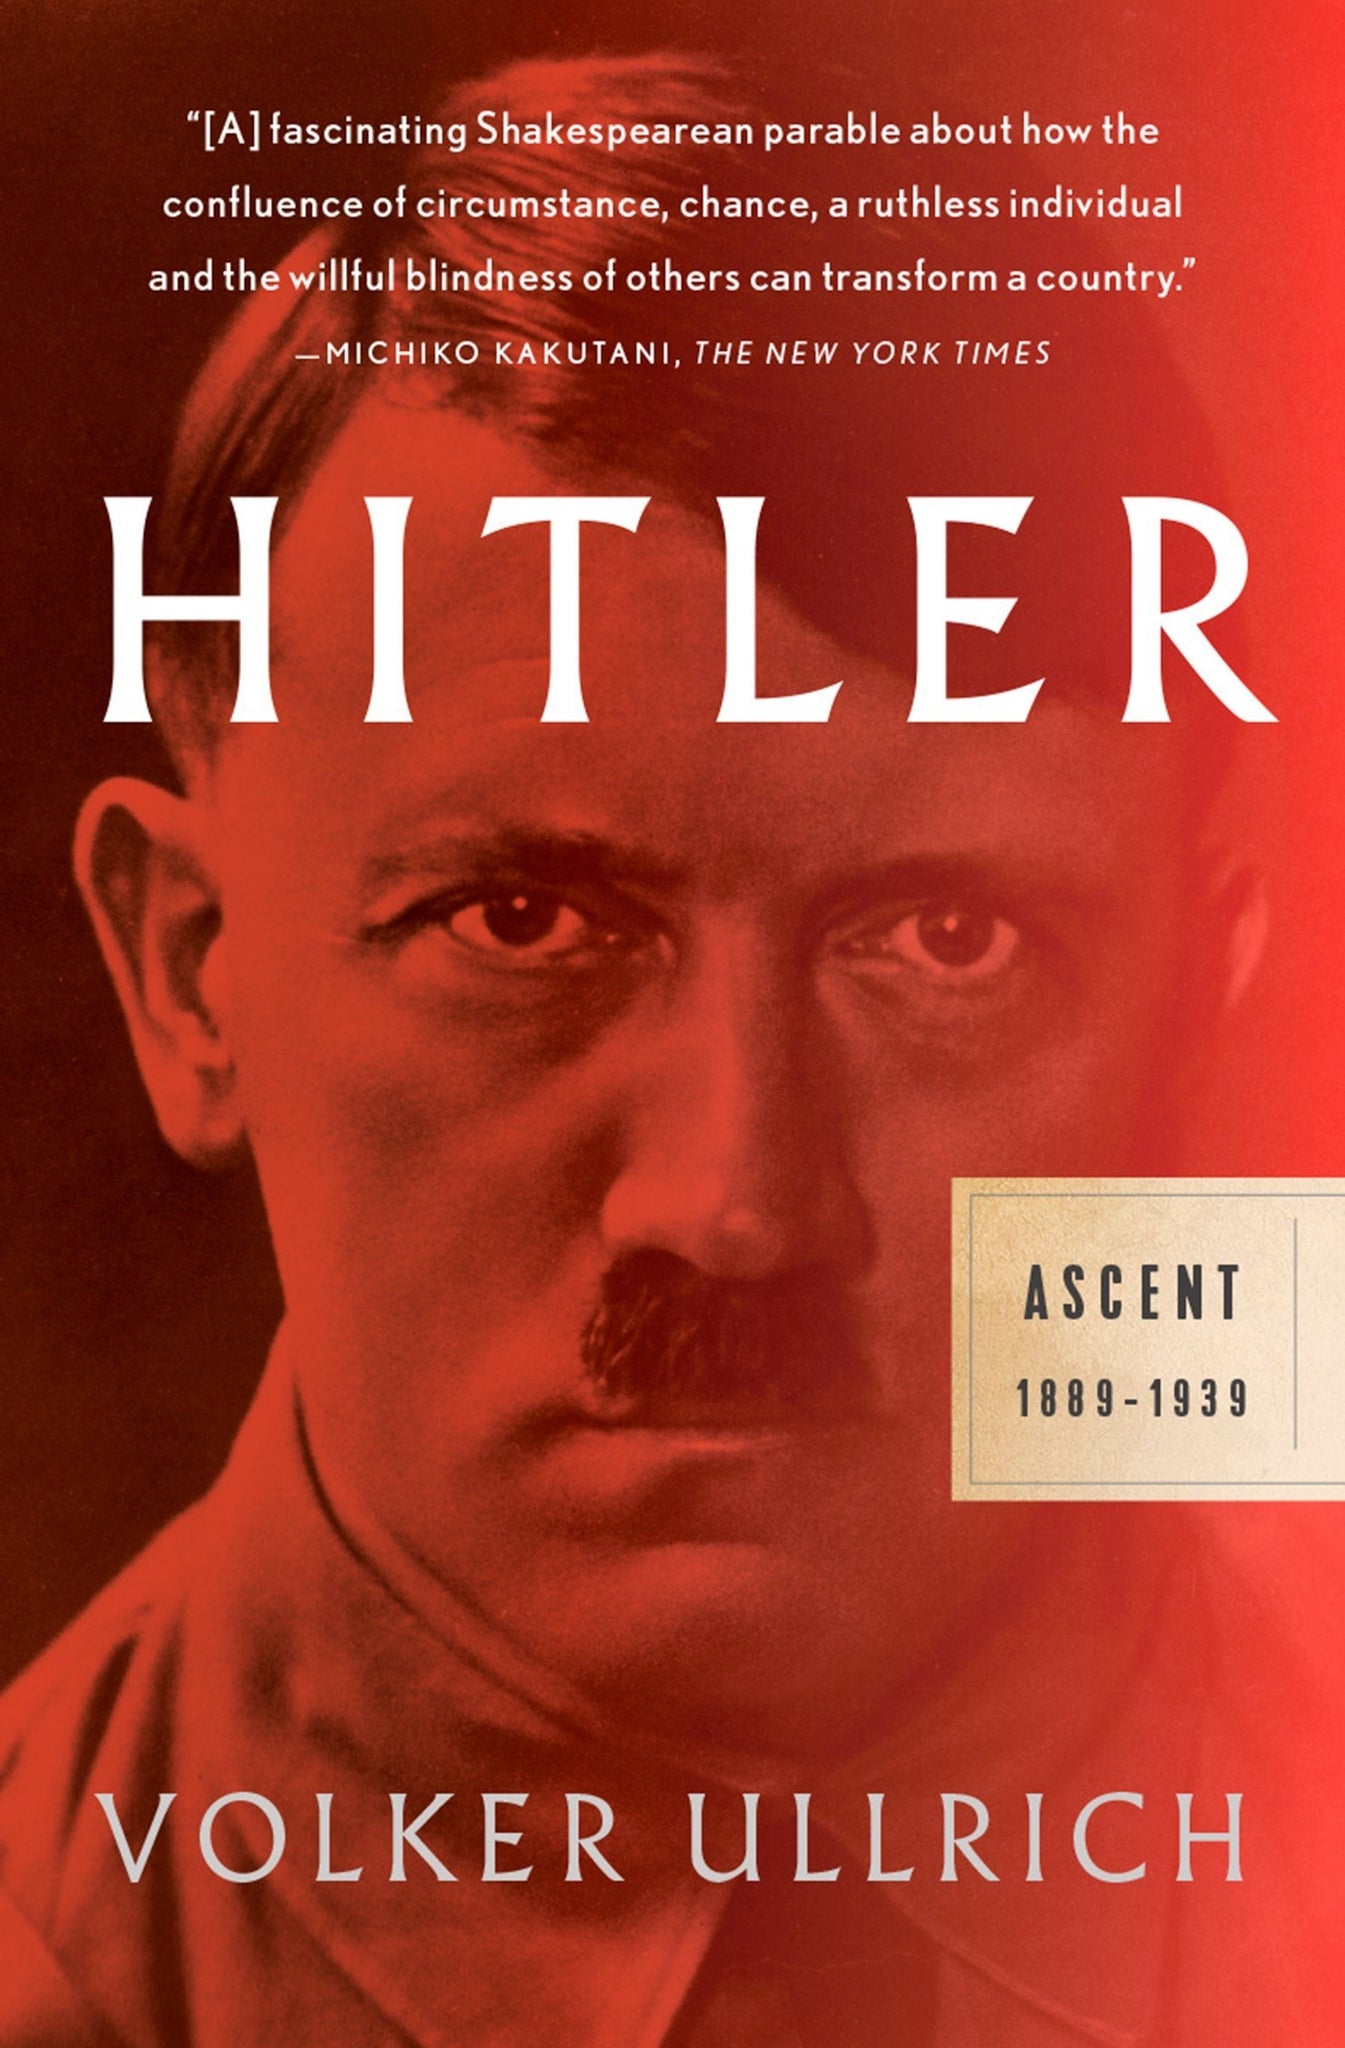 Hitler: Volume 1: Ascent, 1889-1939